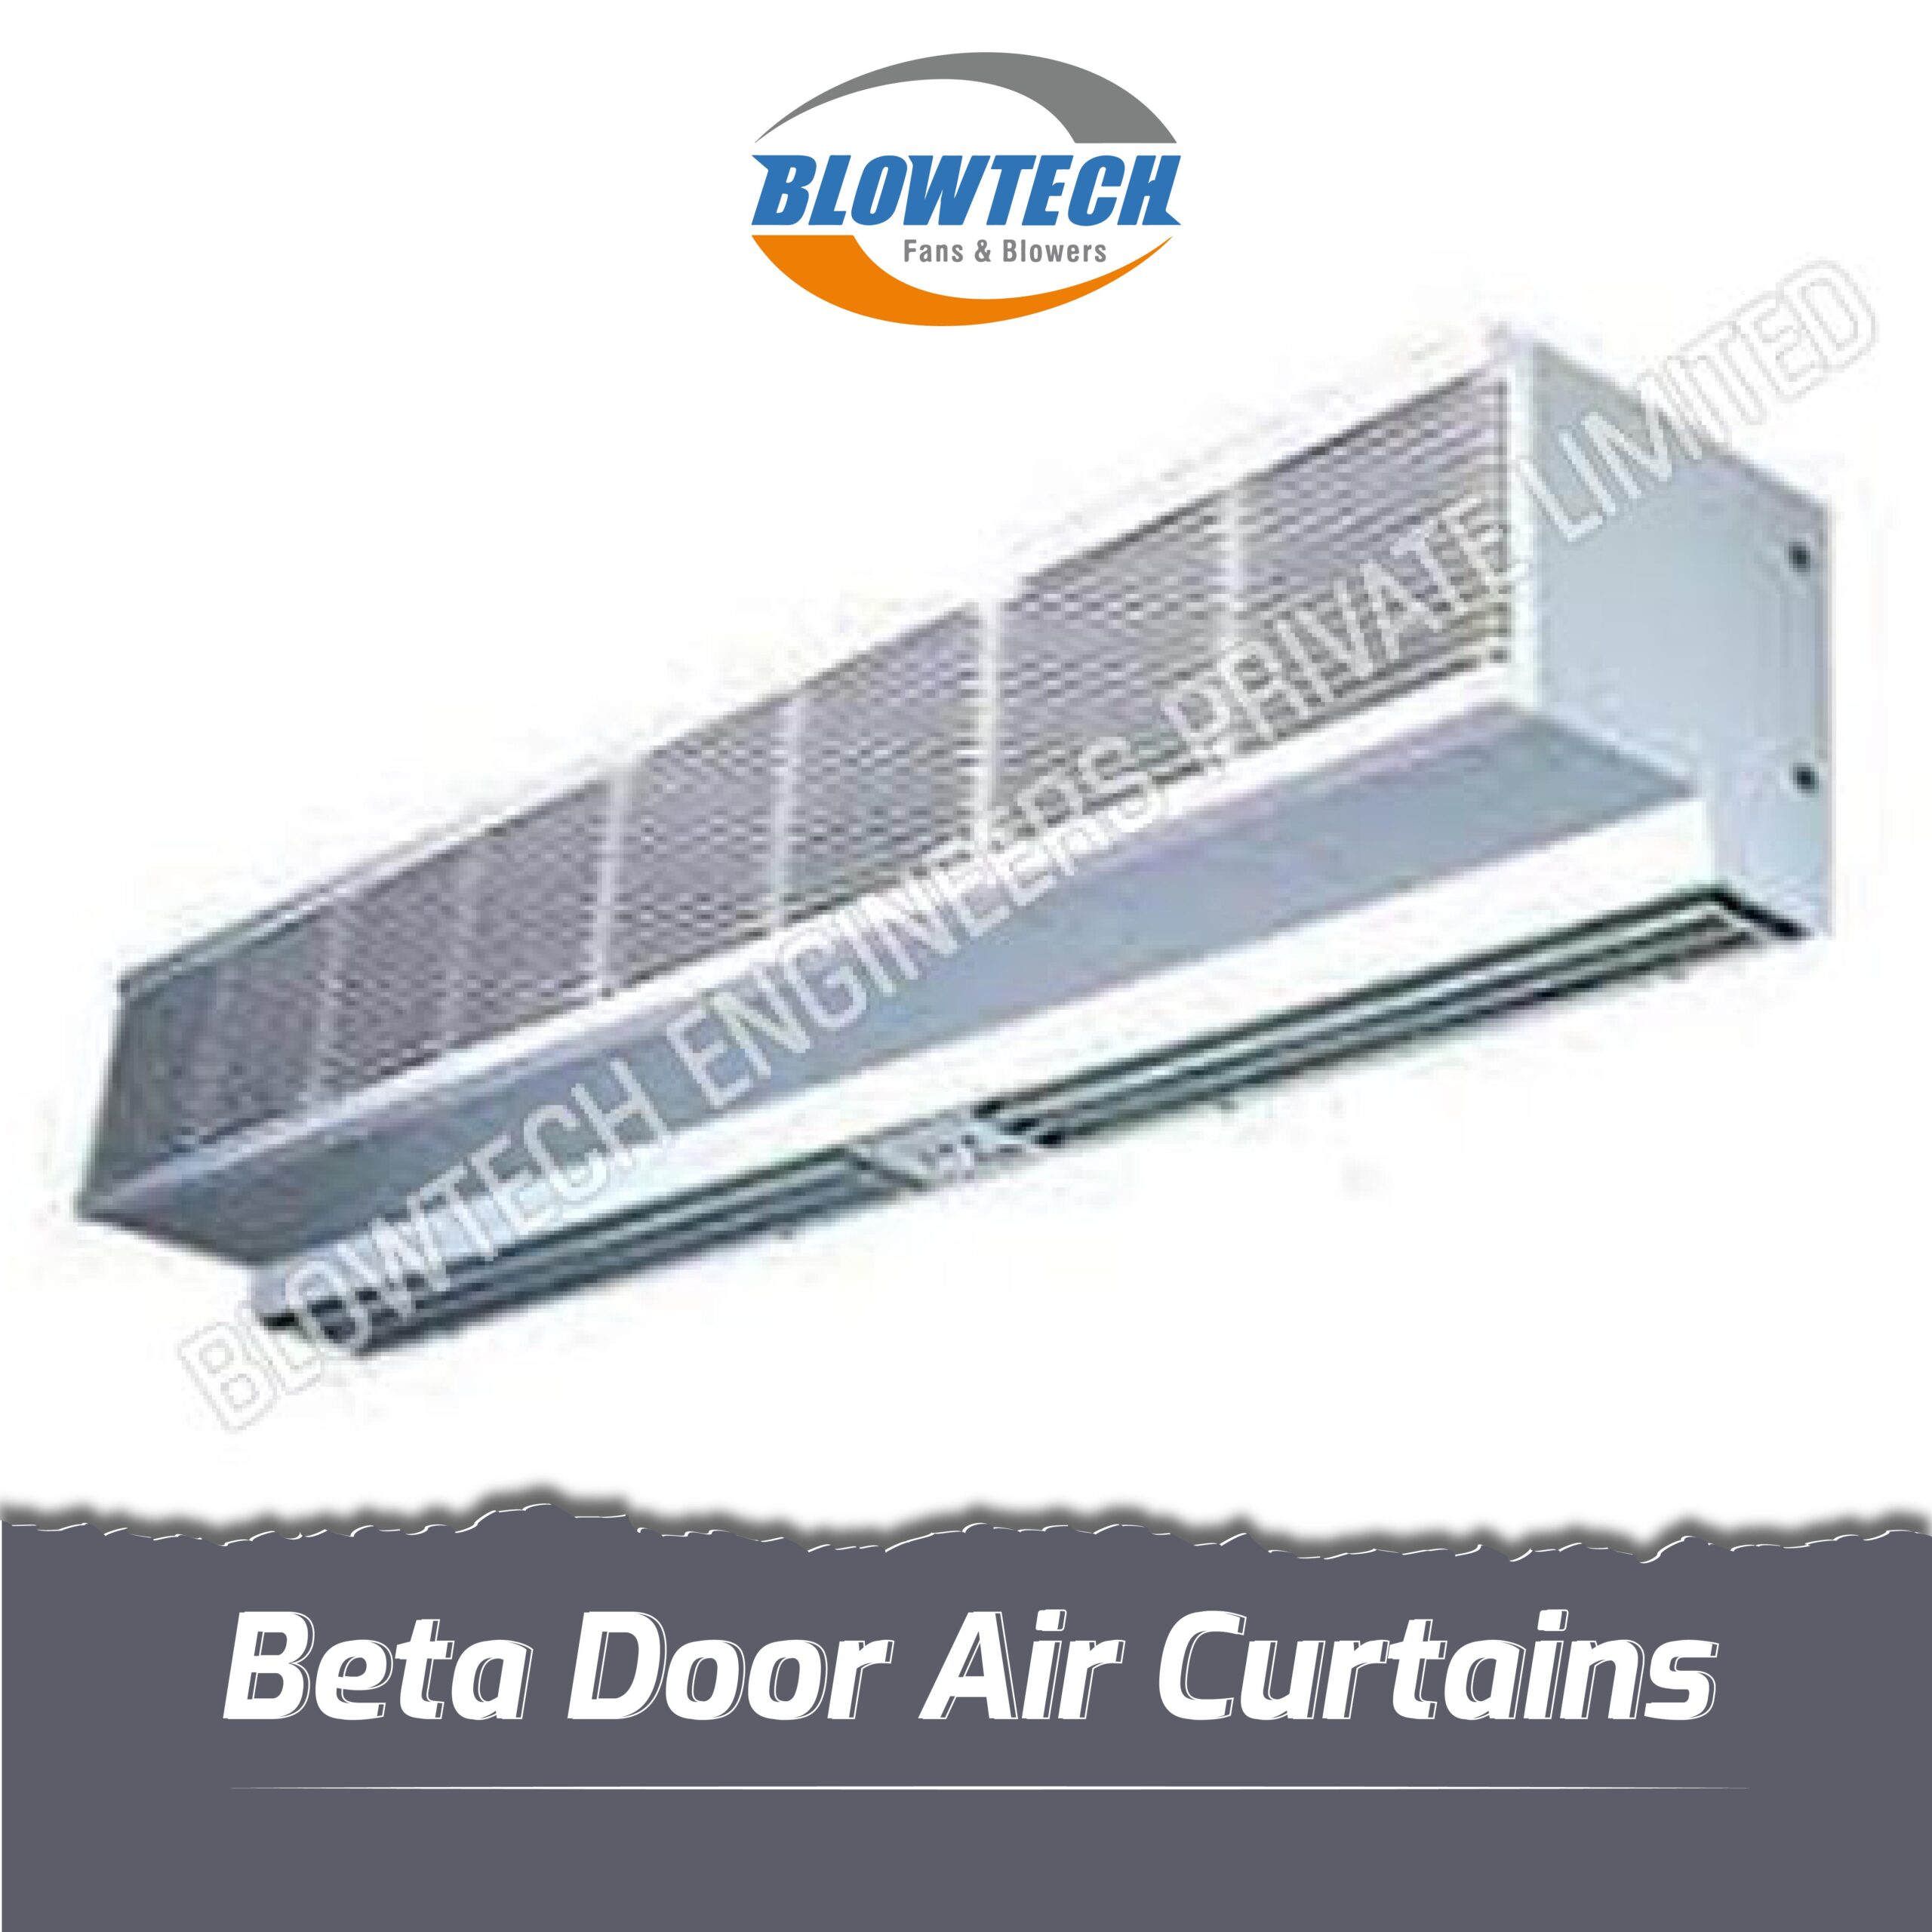 Beta Door Air Curtains  manufacturer, supplier and exporter in Mumbai, India